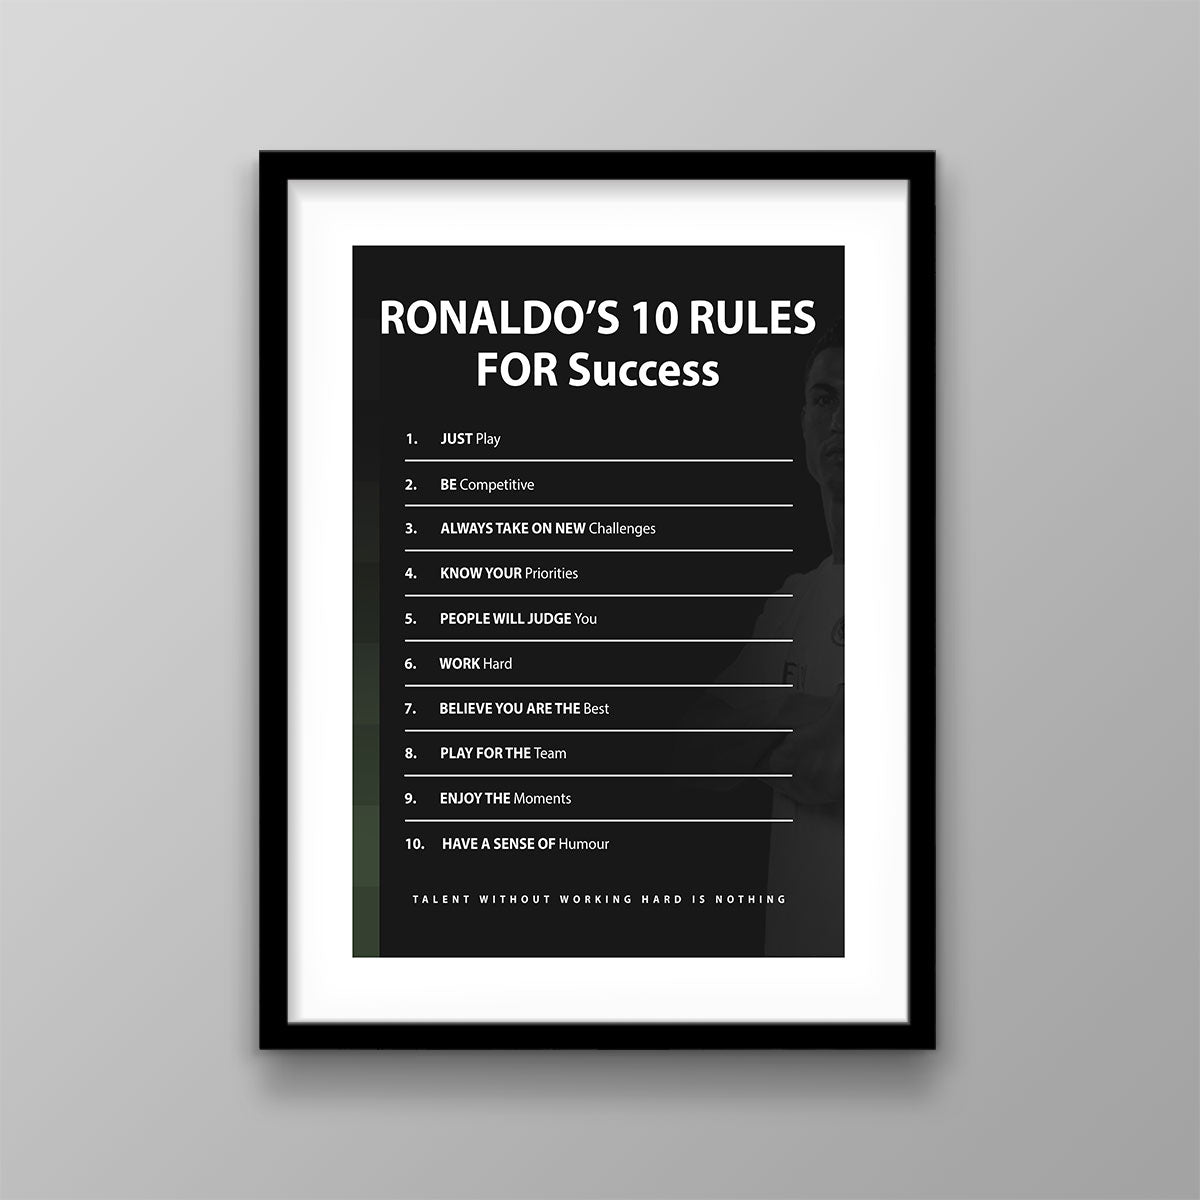 Cristiano Ronaldo's 10 Rules For Success